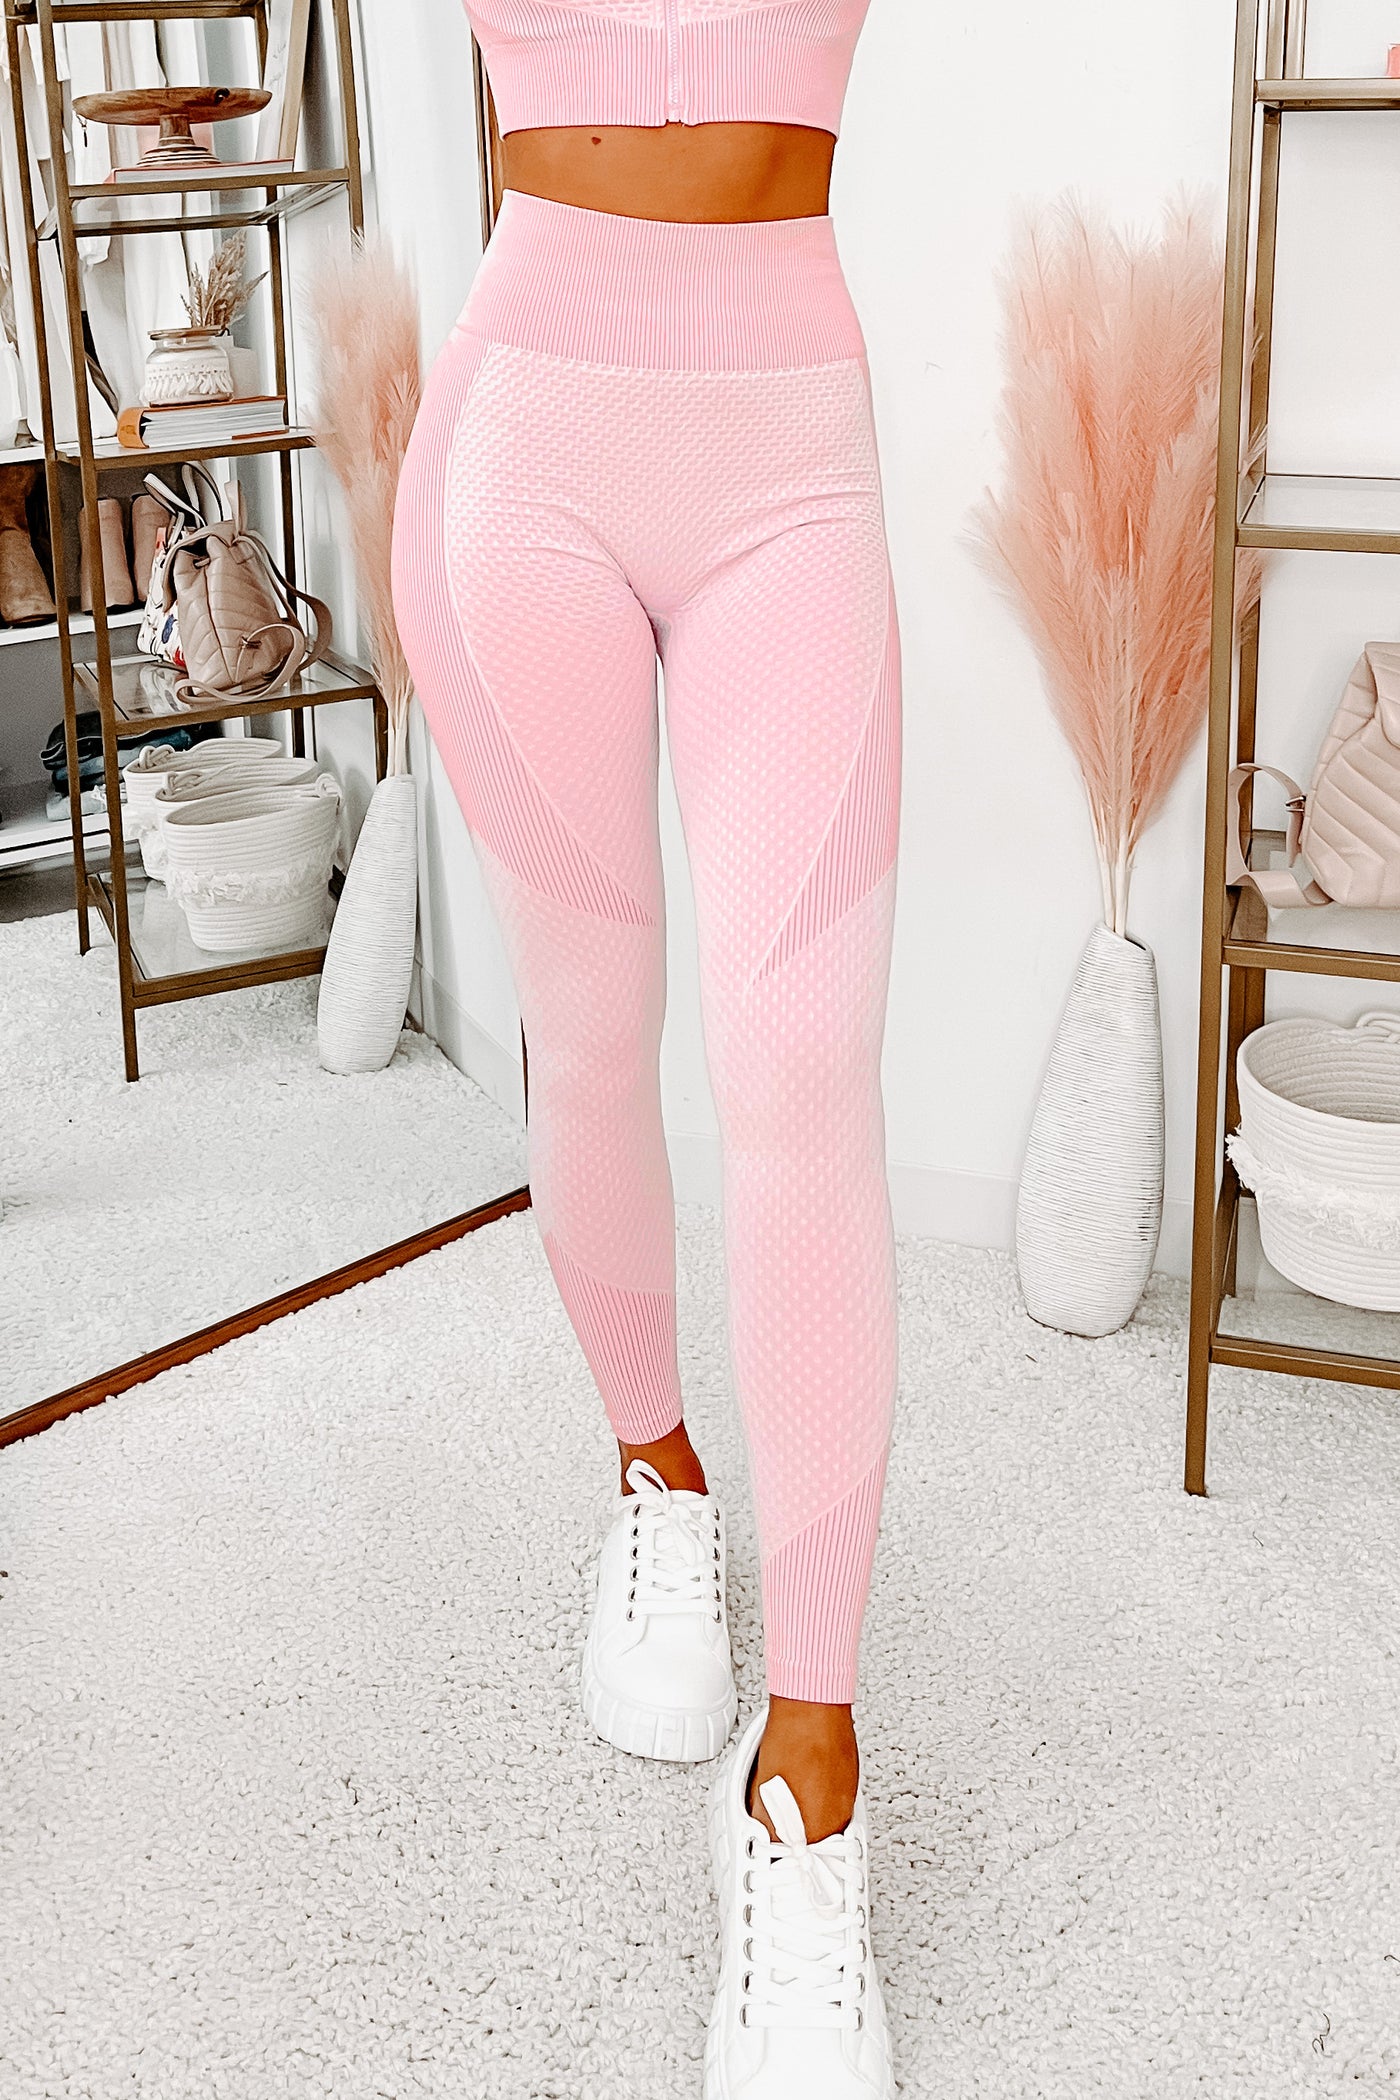 Cardio Cutie Honeycomb Two-Piece Activewear Set (Light Pink